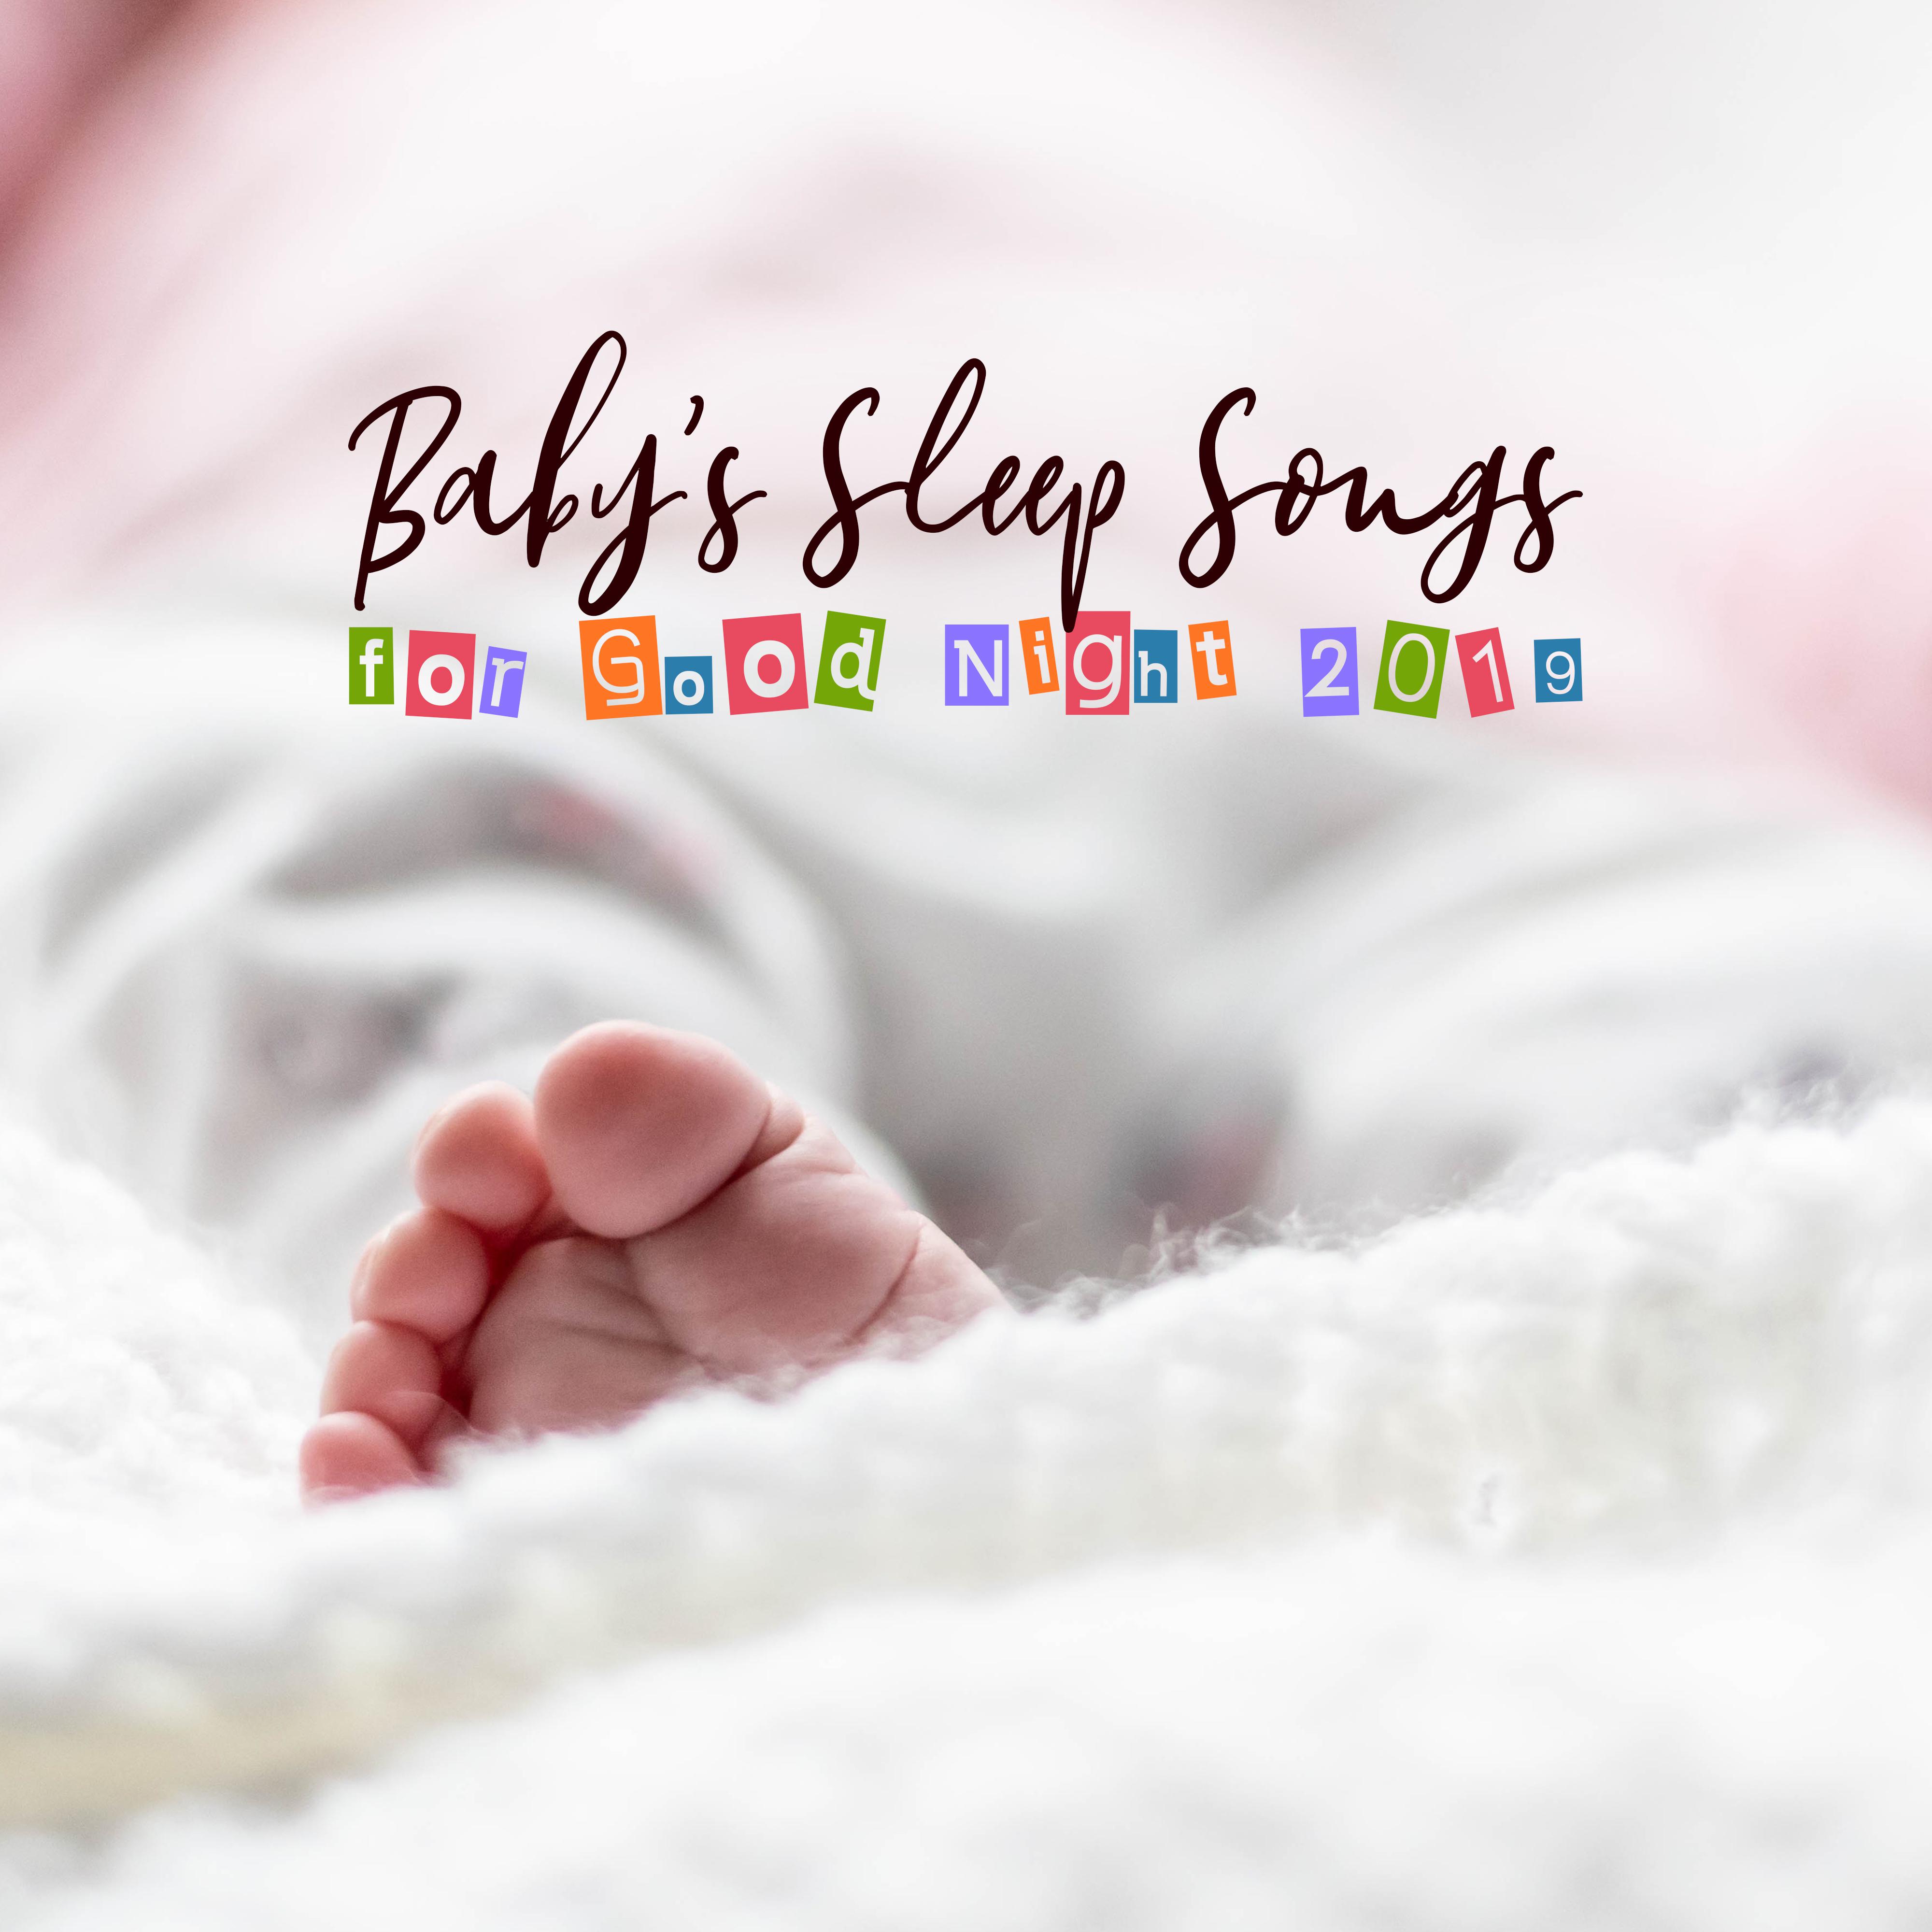 Baby’s Sleep Songs for Good Night 2019